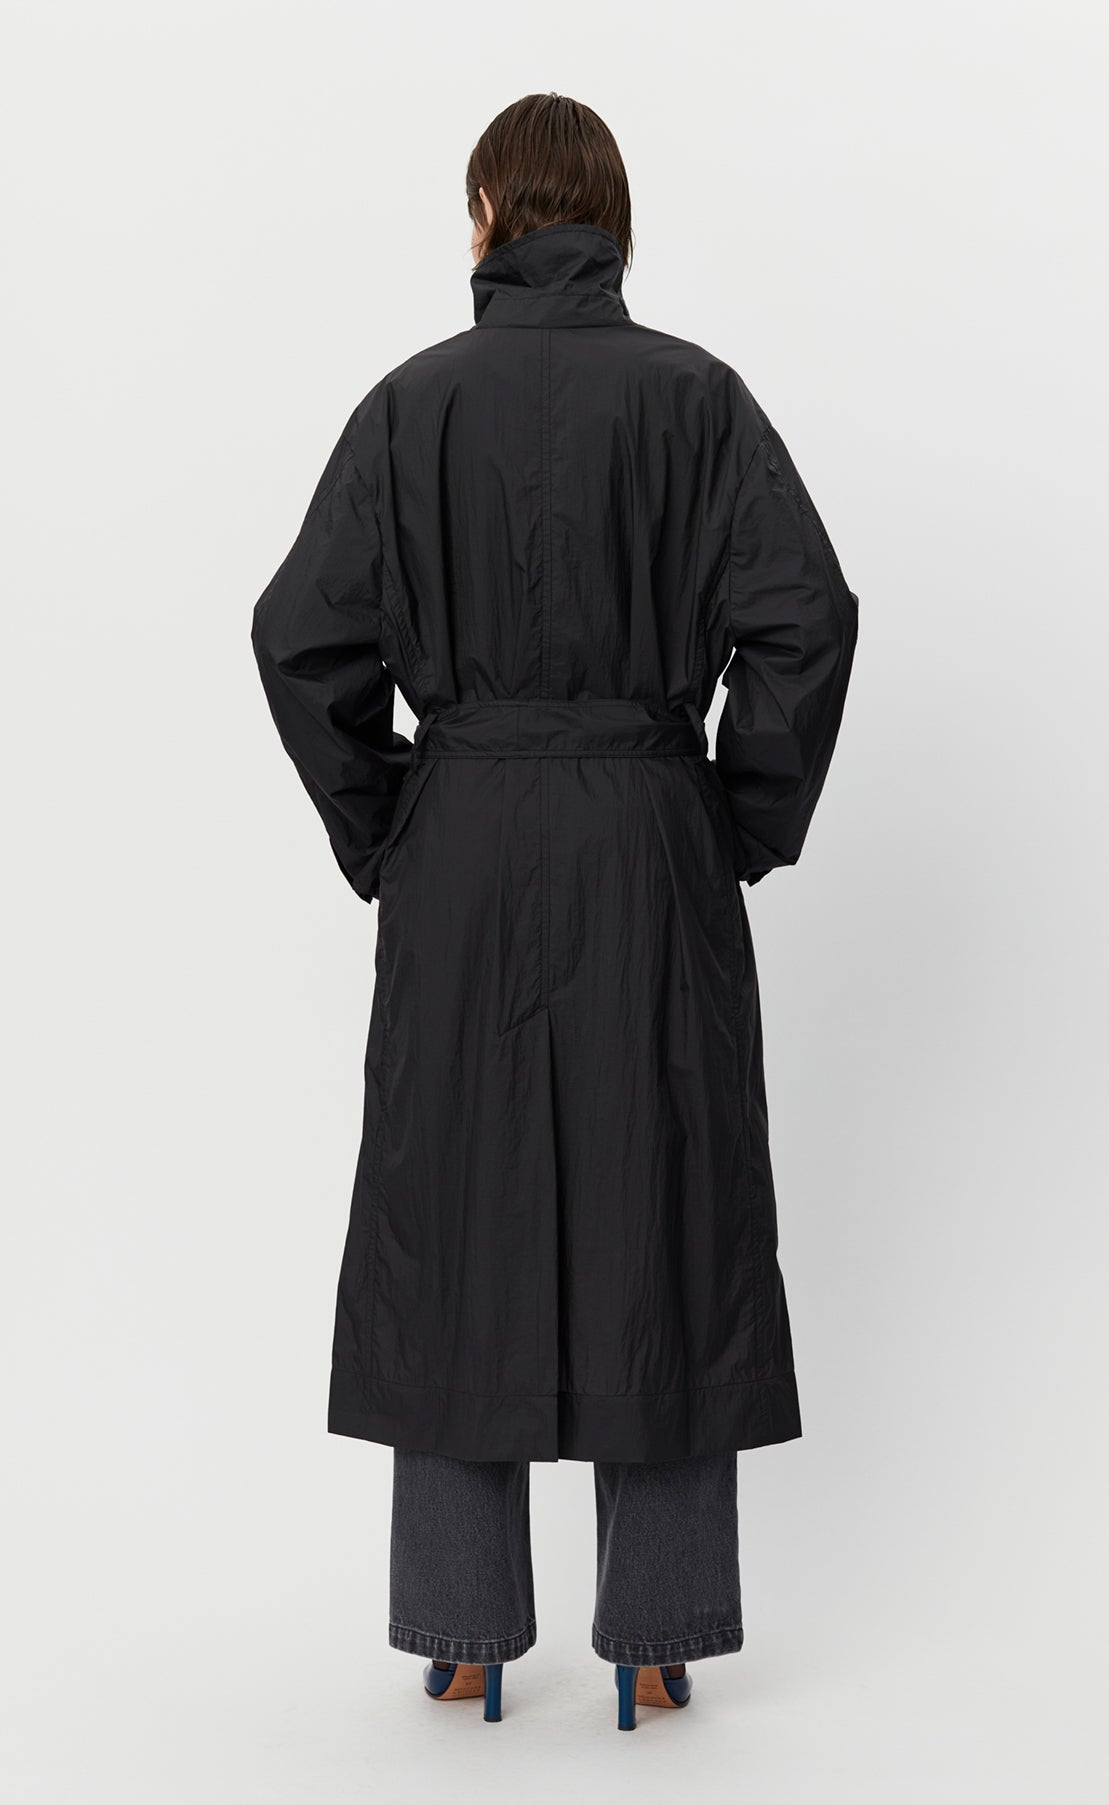 Women's Industry Coat - Recycled Black